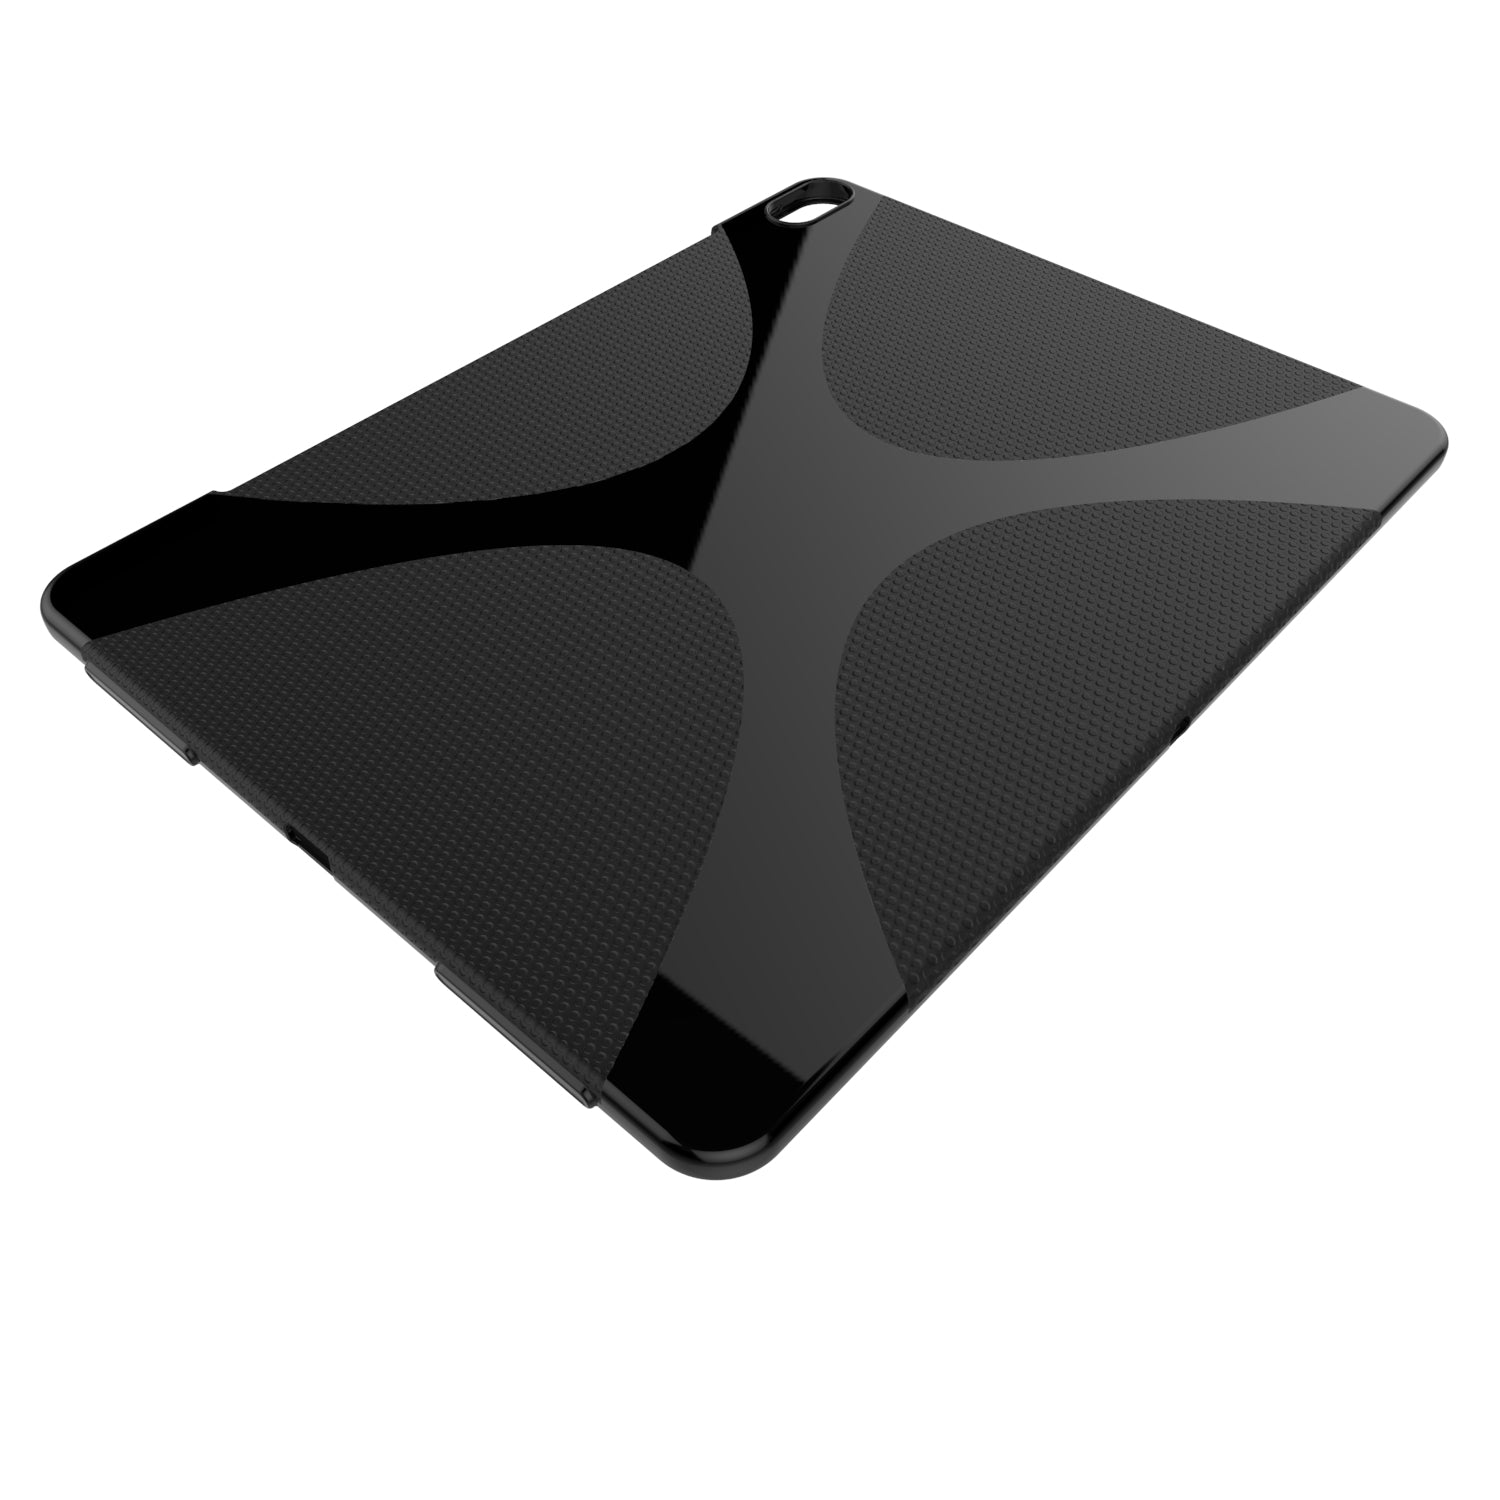 Luvvitt iPad Pro 11 Case X Design Wireless Compatible Flexible TPU Cover - Black